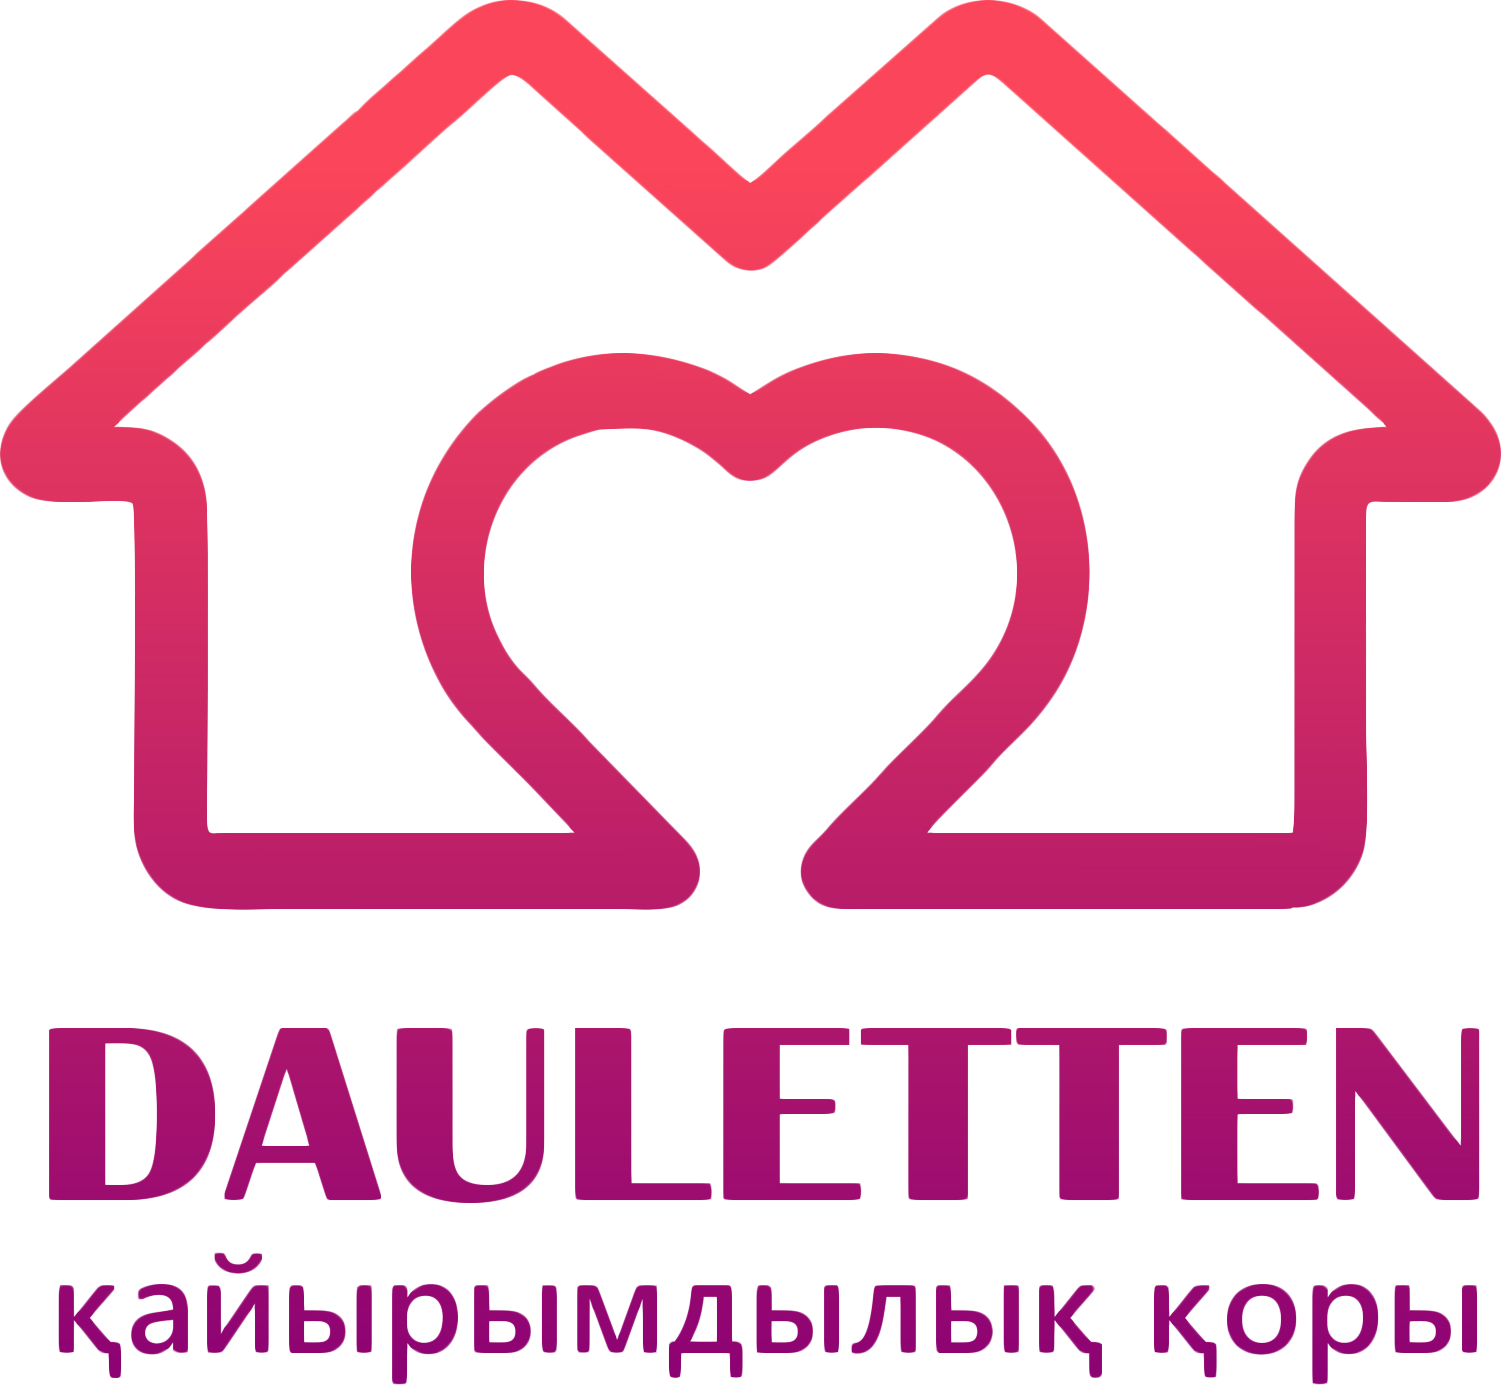 Dauletten